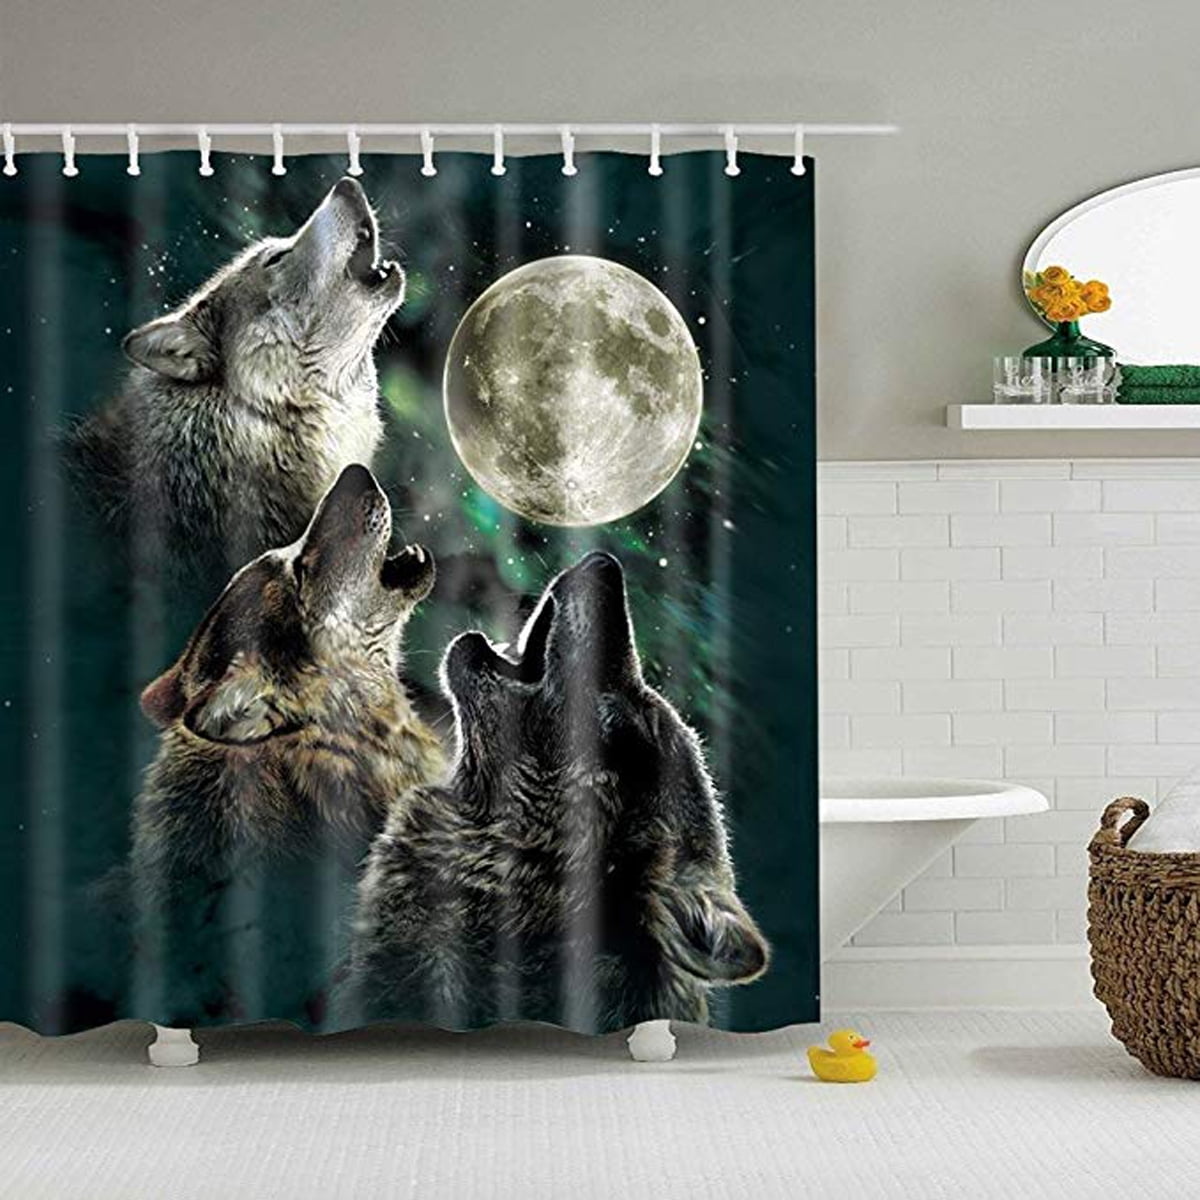 Dreamcatcher Wolf Star Bath Mat Bathroom Carpet Bedroom Floor Rug Non-Slip24x16" 